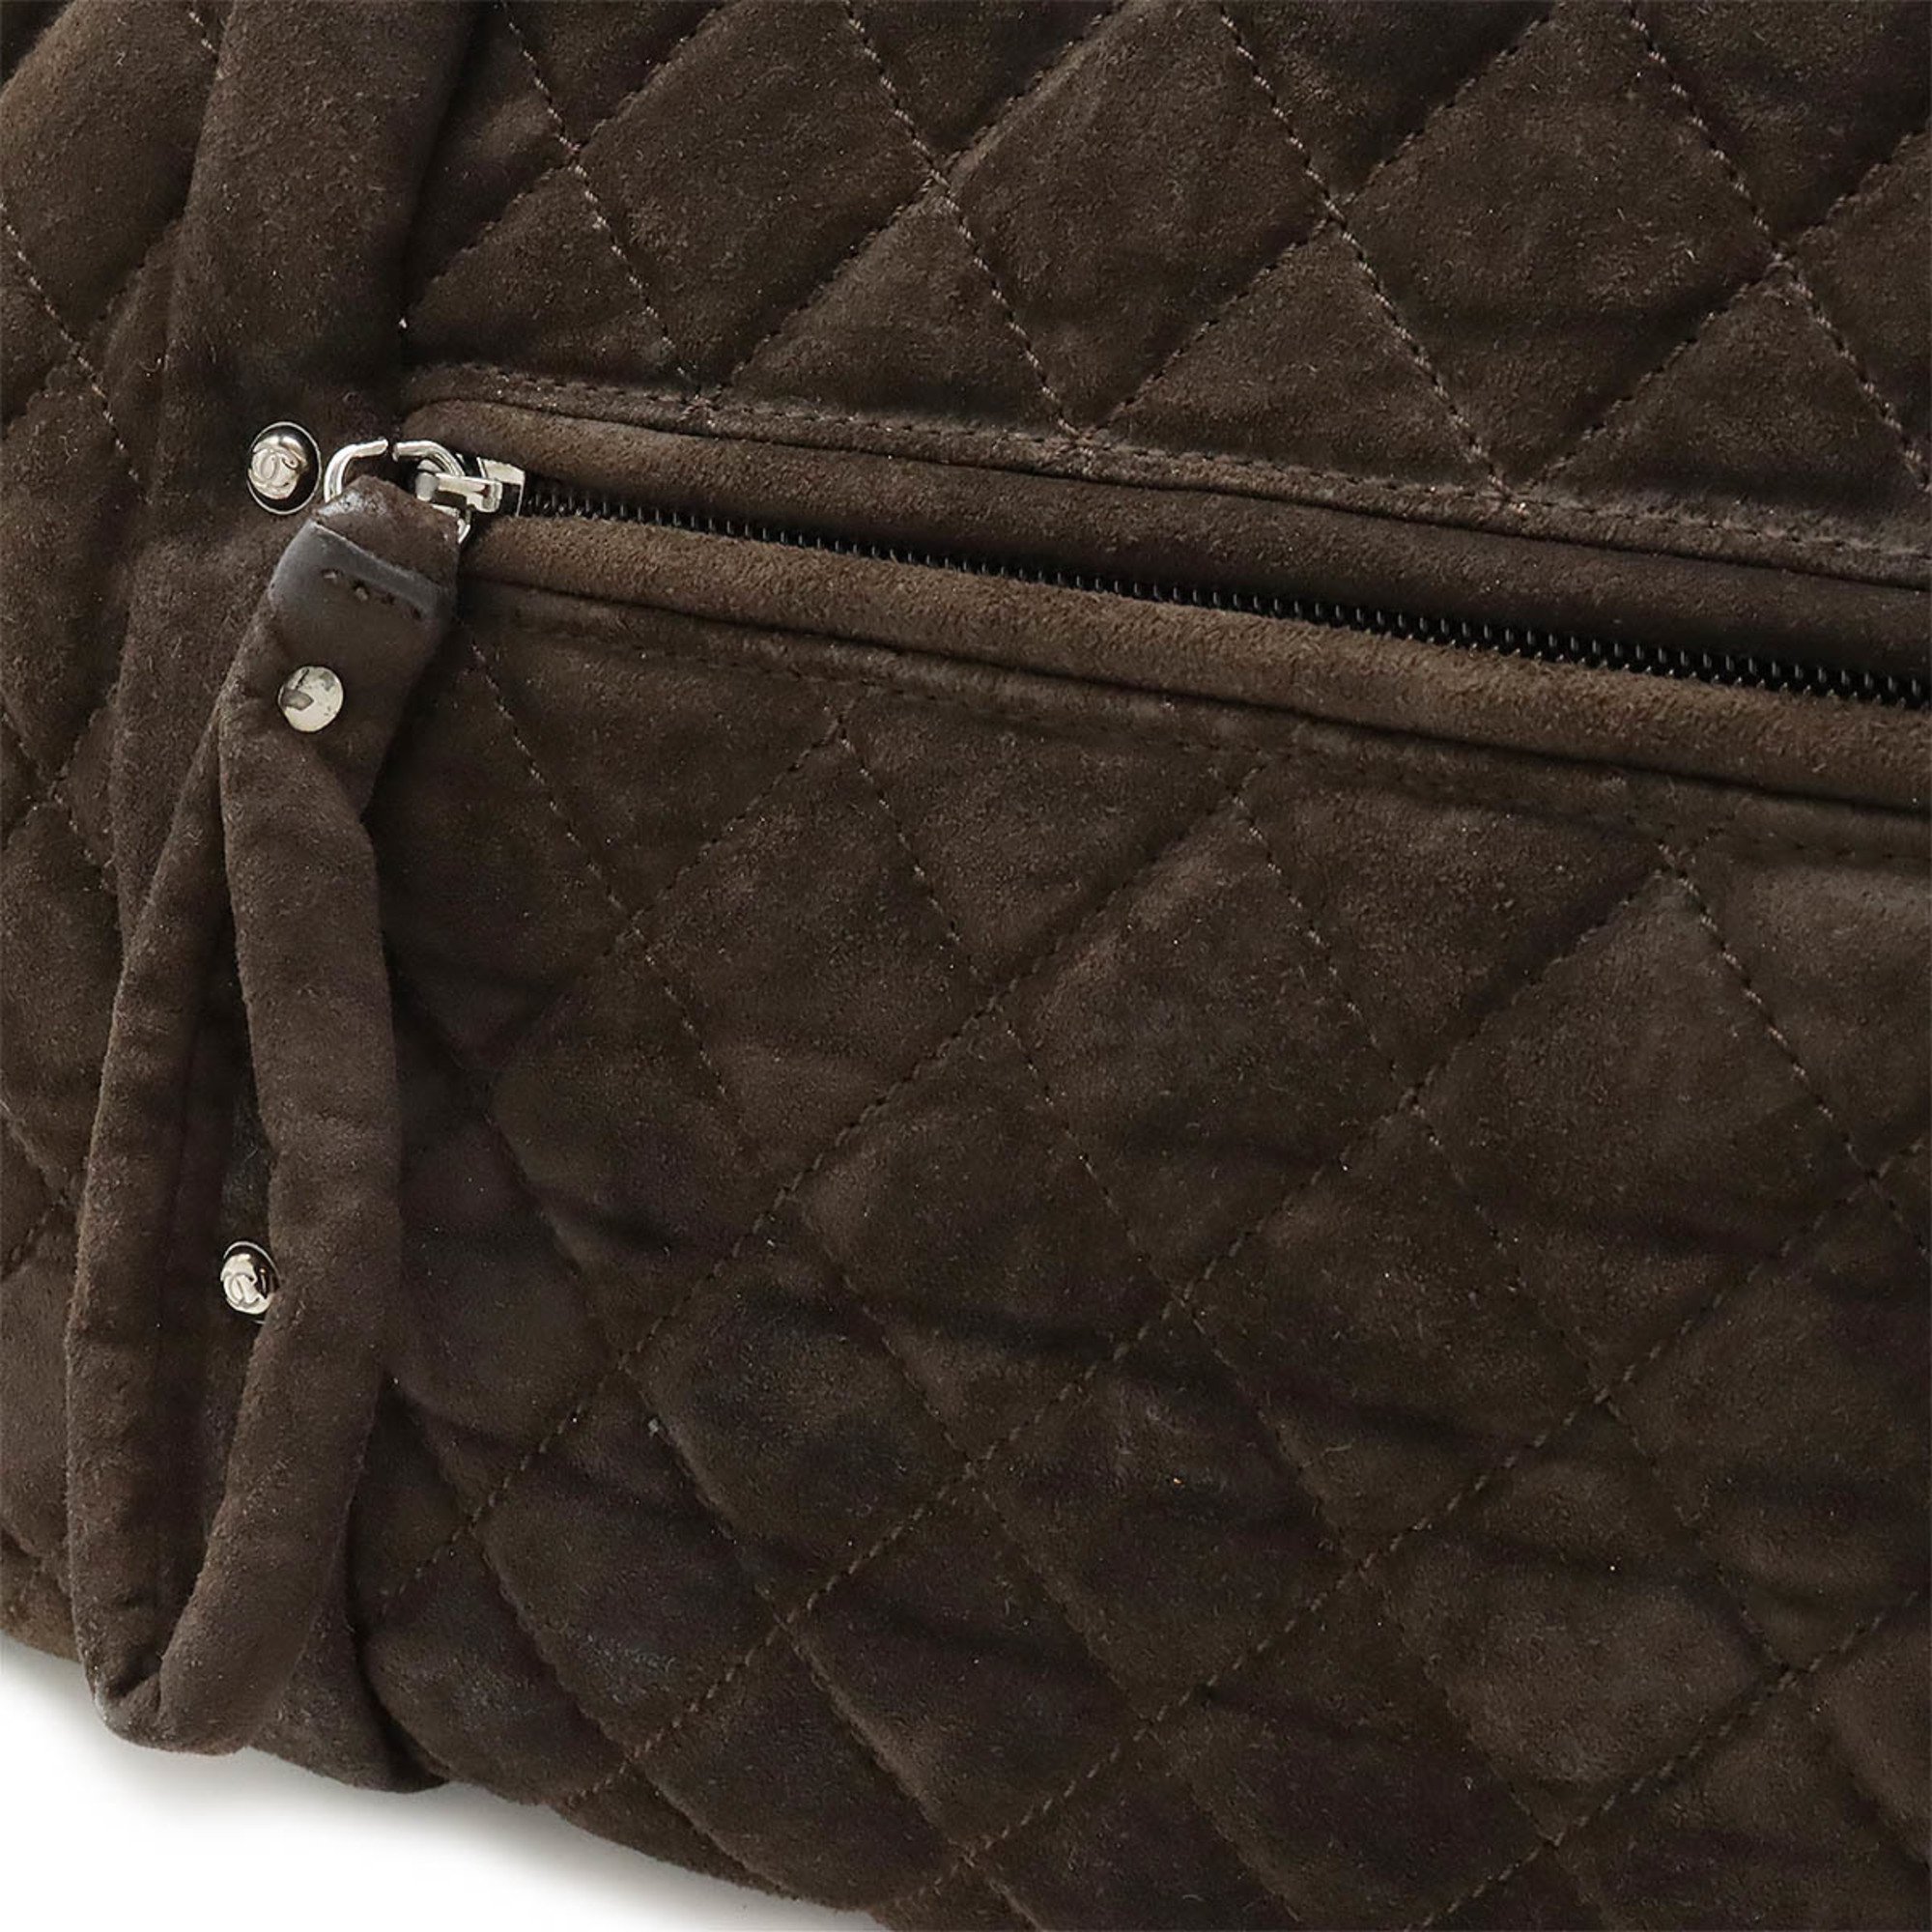 Chanel Women's Suede Tote Bag Brown,Dark Brown